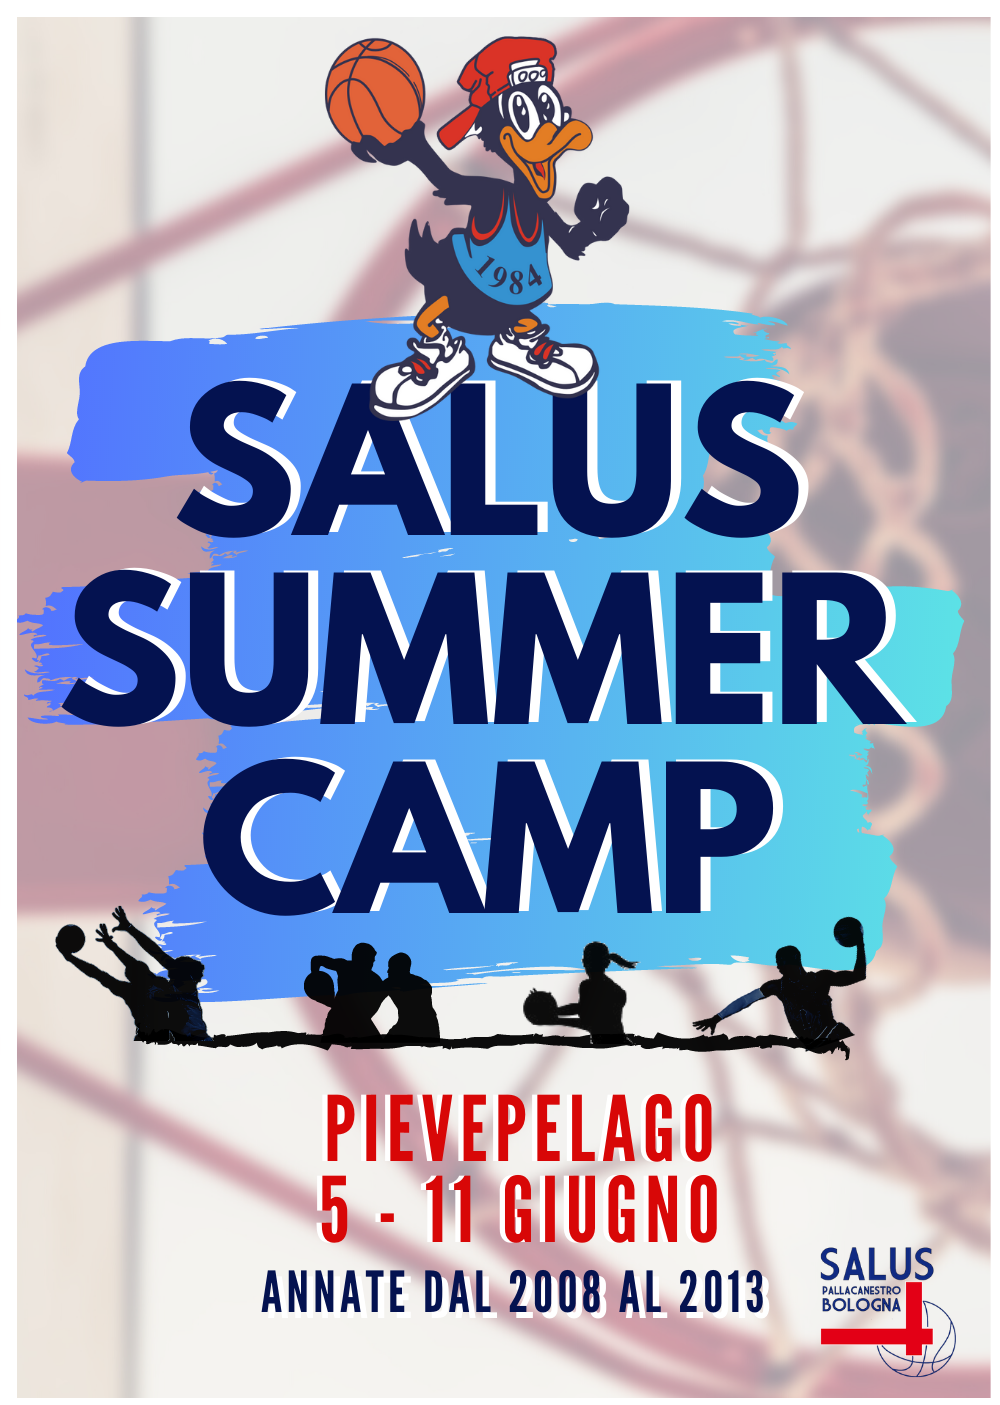 Summer Camp Salus